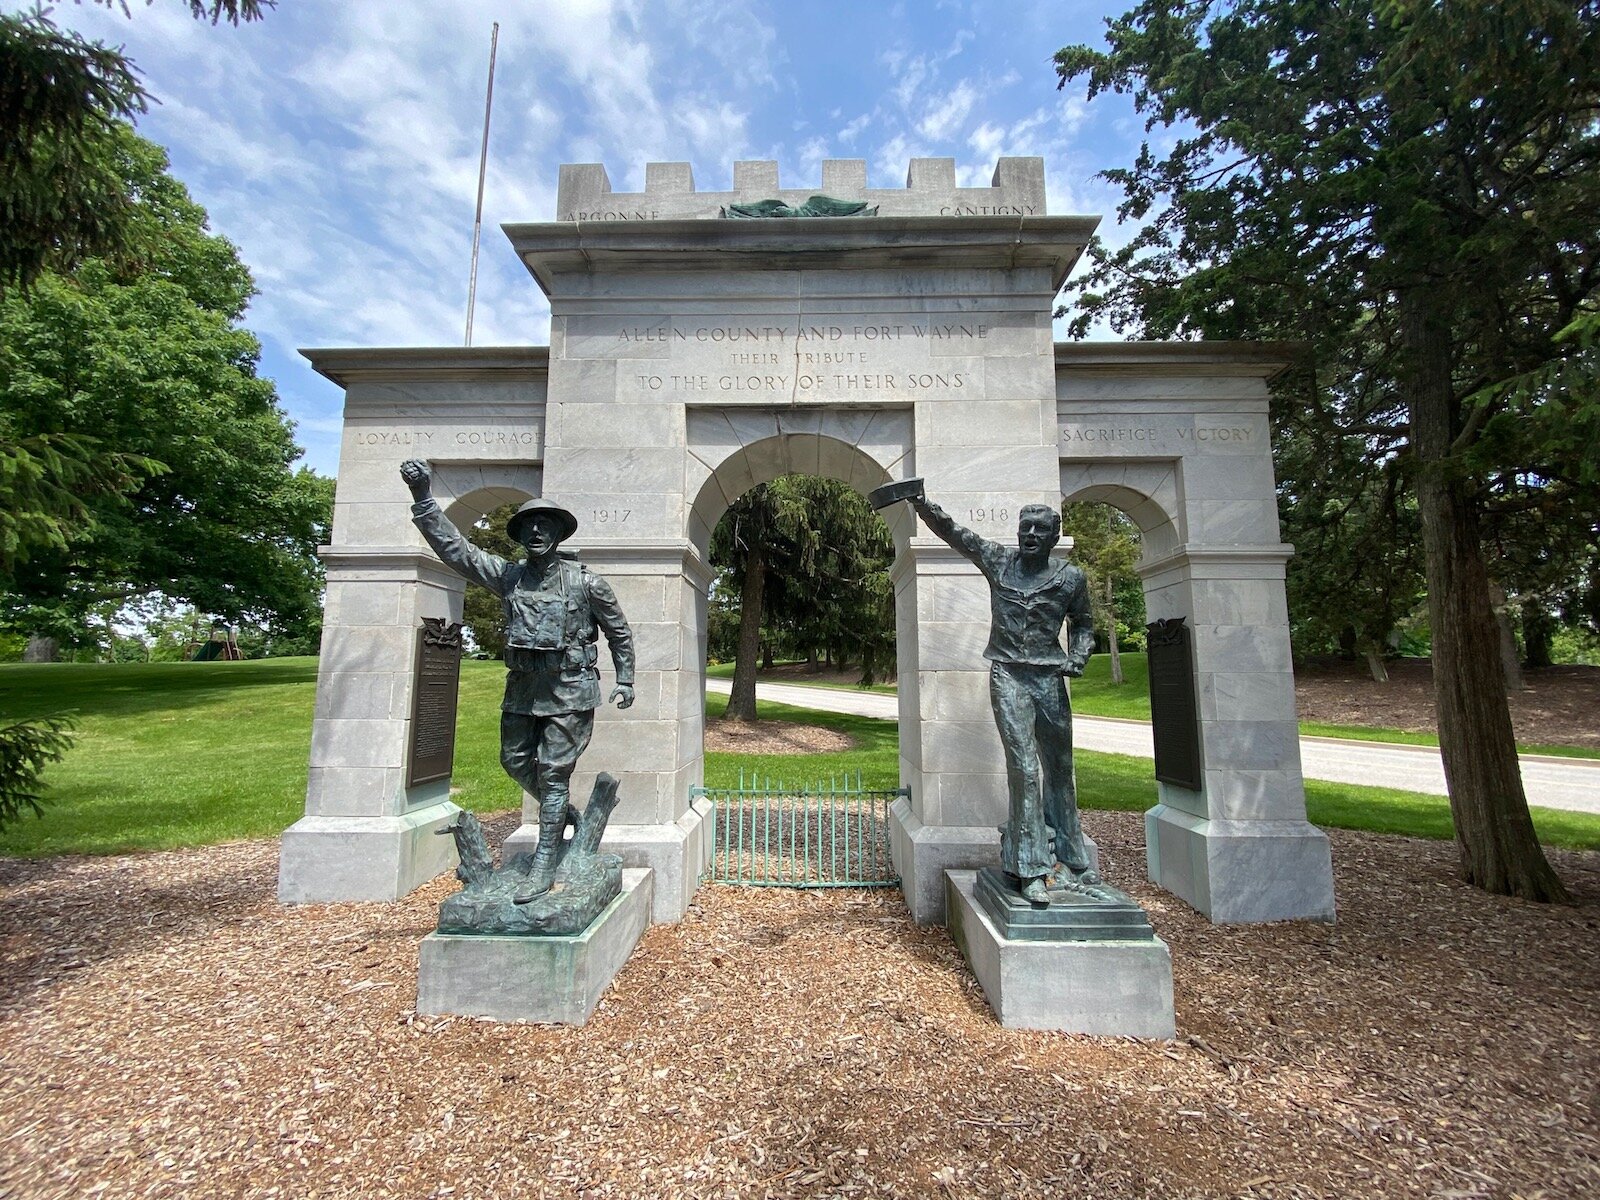 Artist E. M. Viquesney’s “The Spirit of the American Doughboy” and “Spirit of the American Navy” statues in Fort Wayne's Memorial Park.